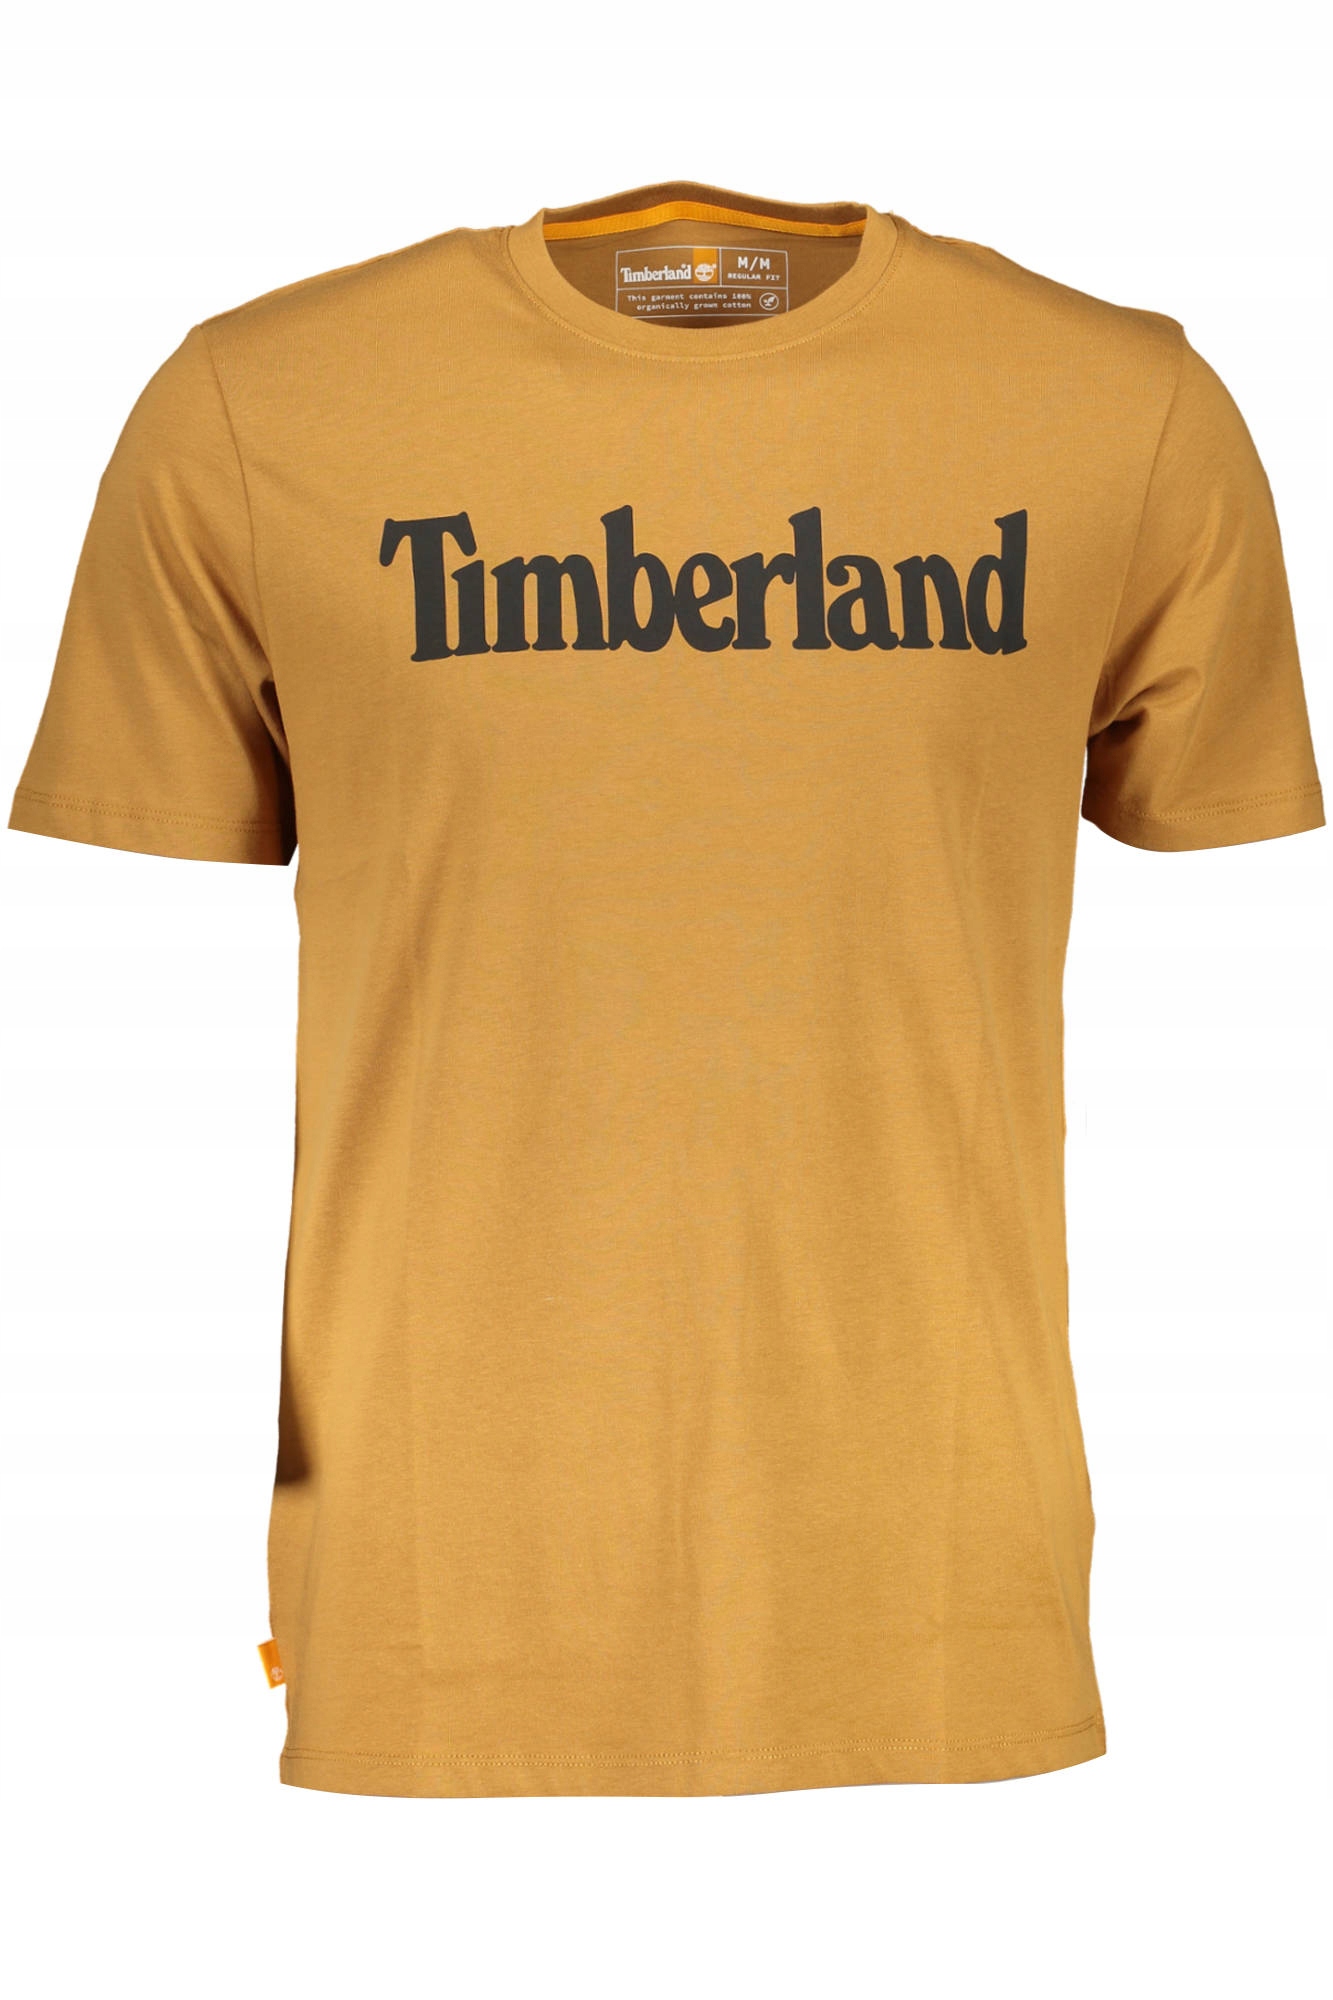 whisky Soeverein Auckland TIMBERLAND T-shirt koszulka męska TB0A2BRN 3XL 12694907112 - Allegro.pl